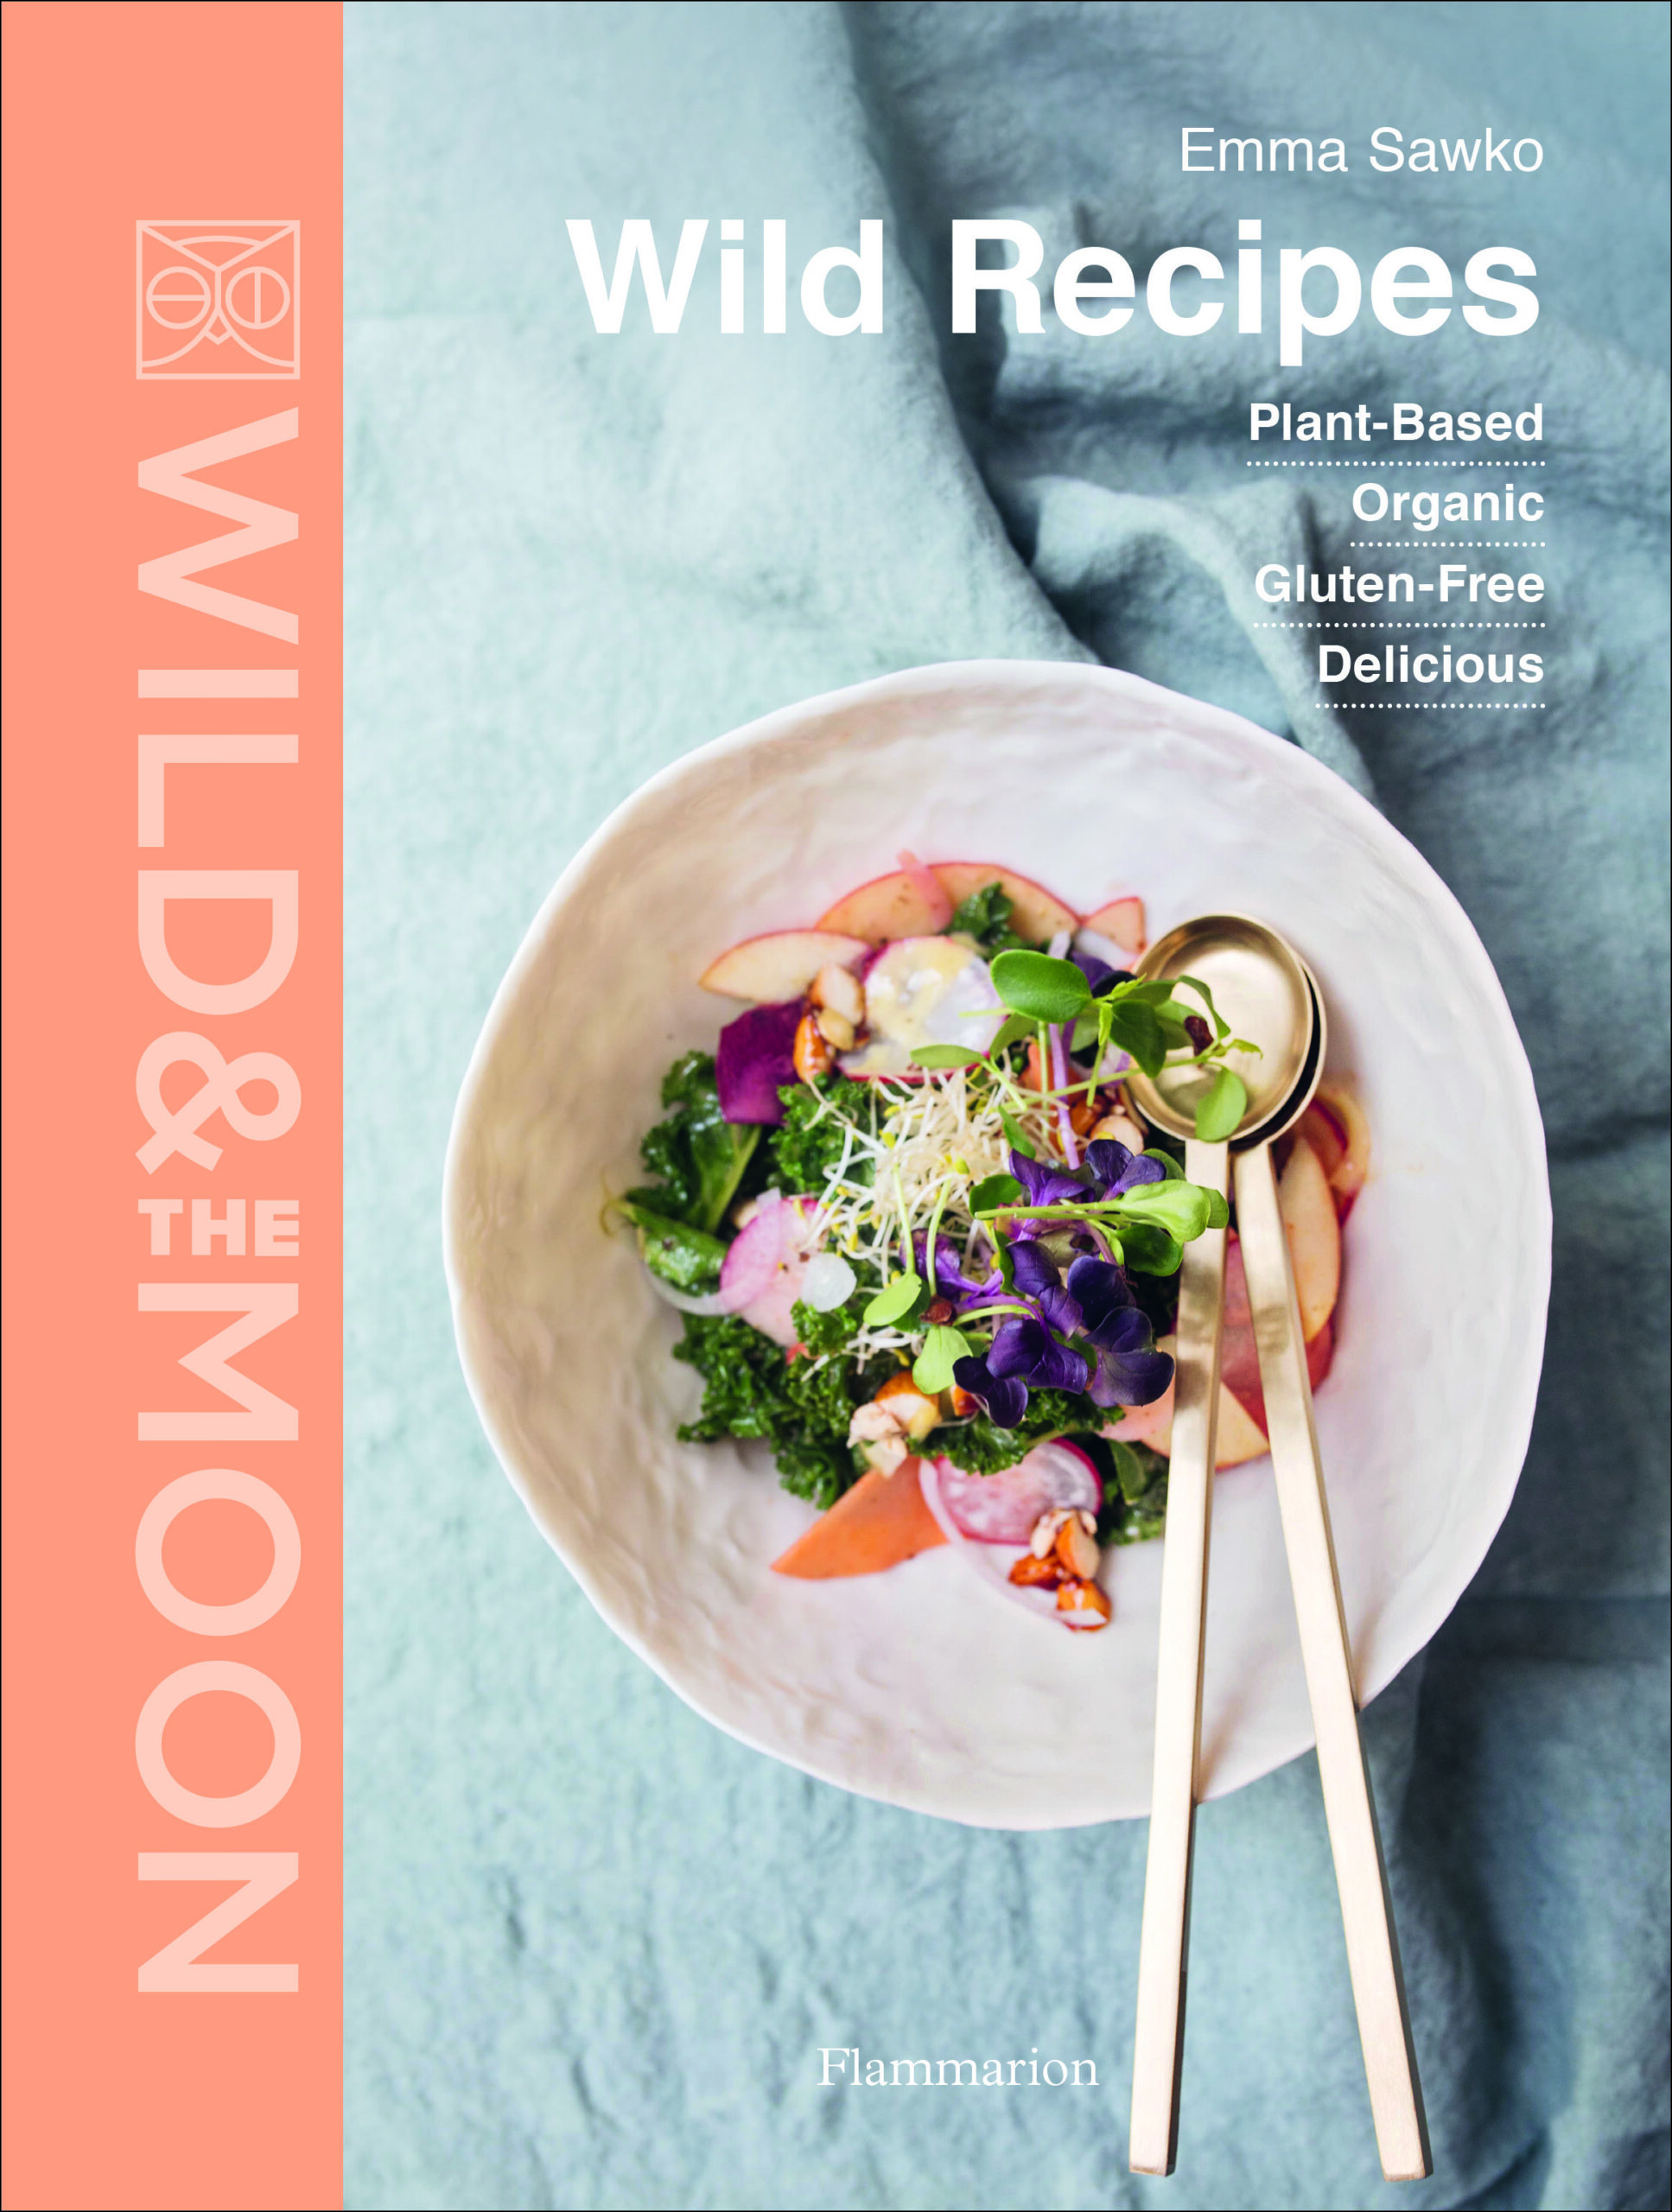 Wild Recipes by Emma Sawko